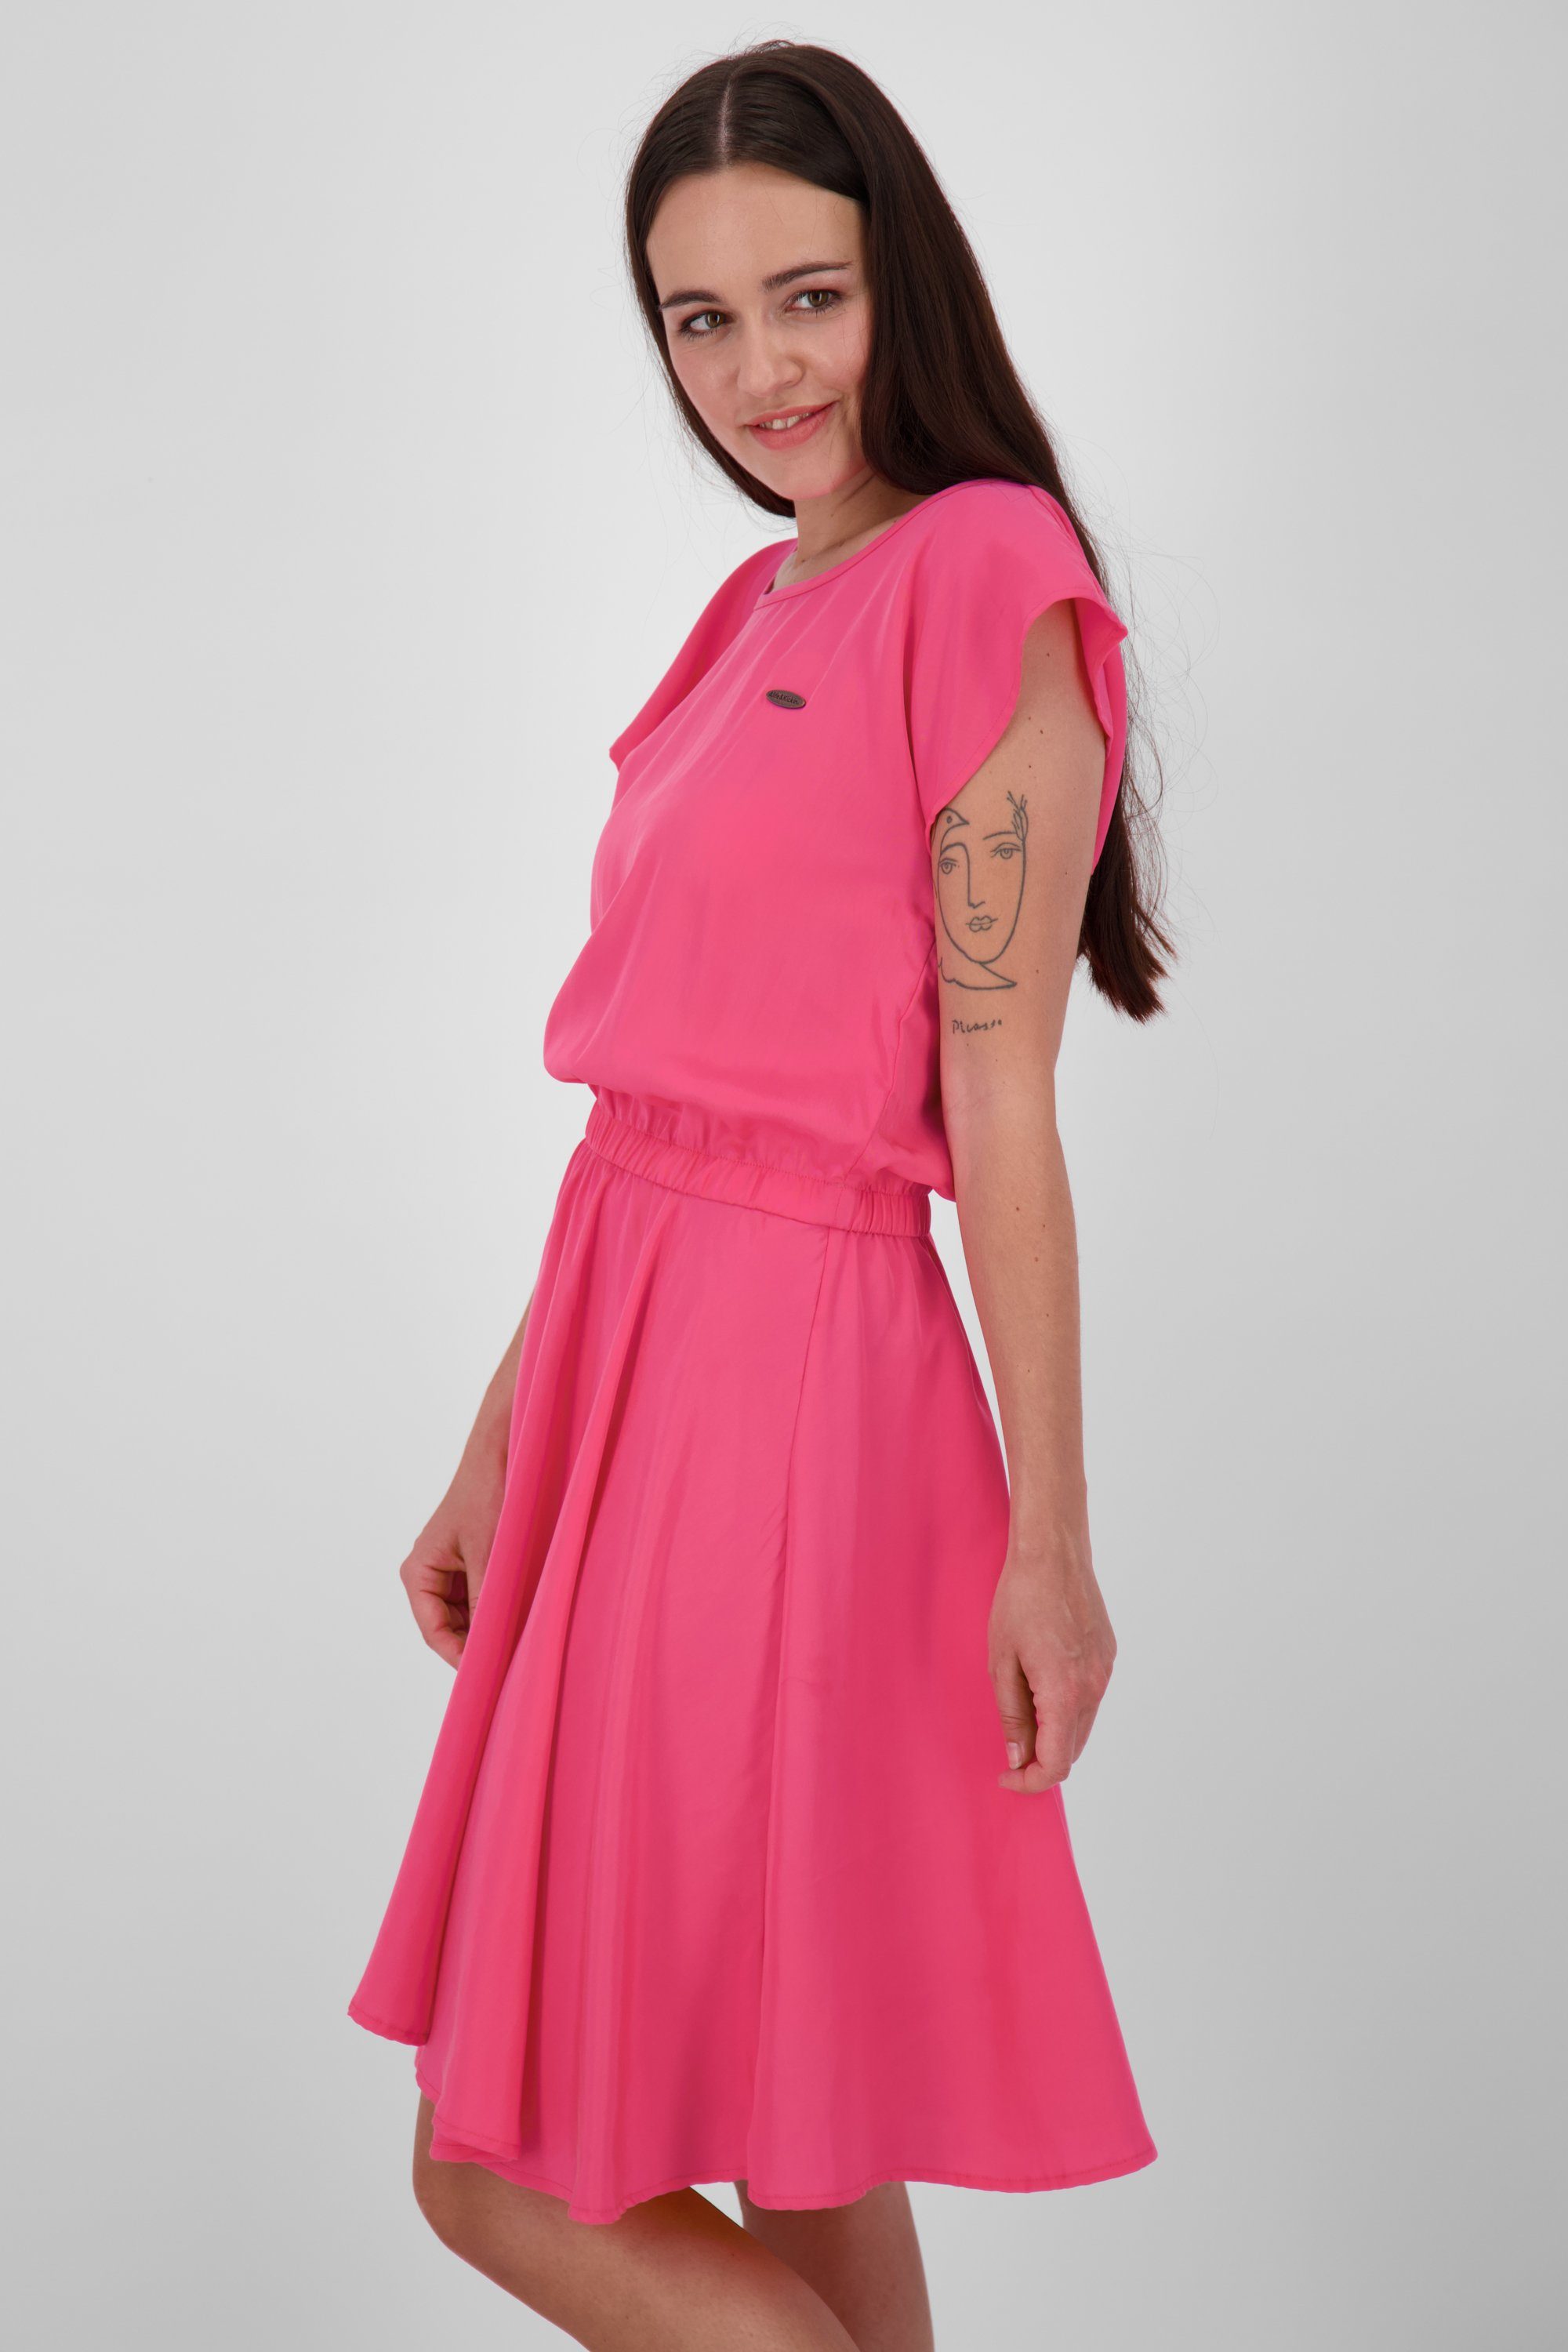 Alife & Damen IsabellaAK Kickin Kleid Sommerkleid, flamingo Dress Jerseykleid